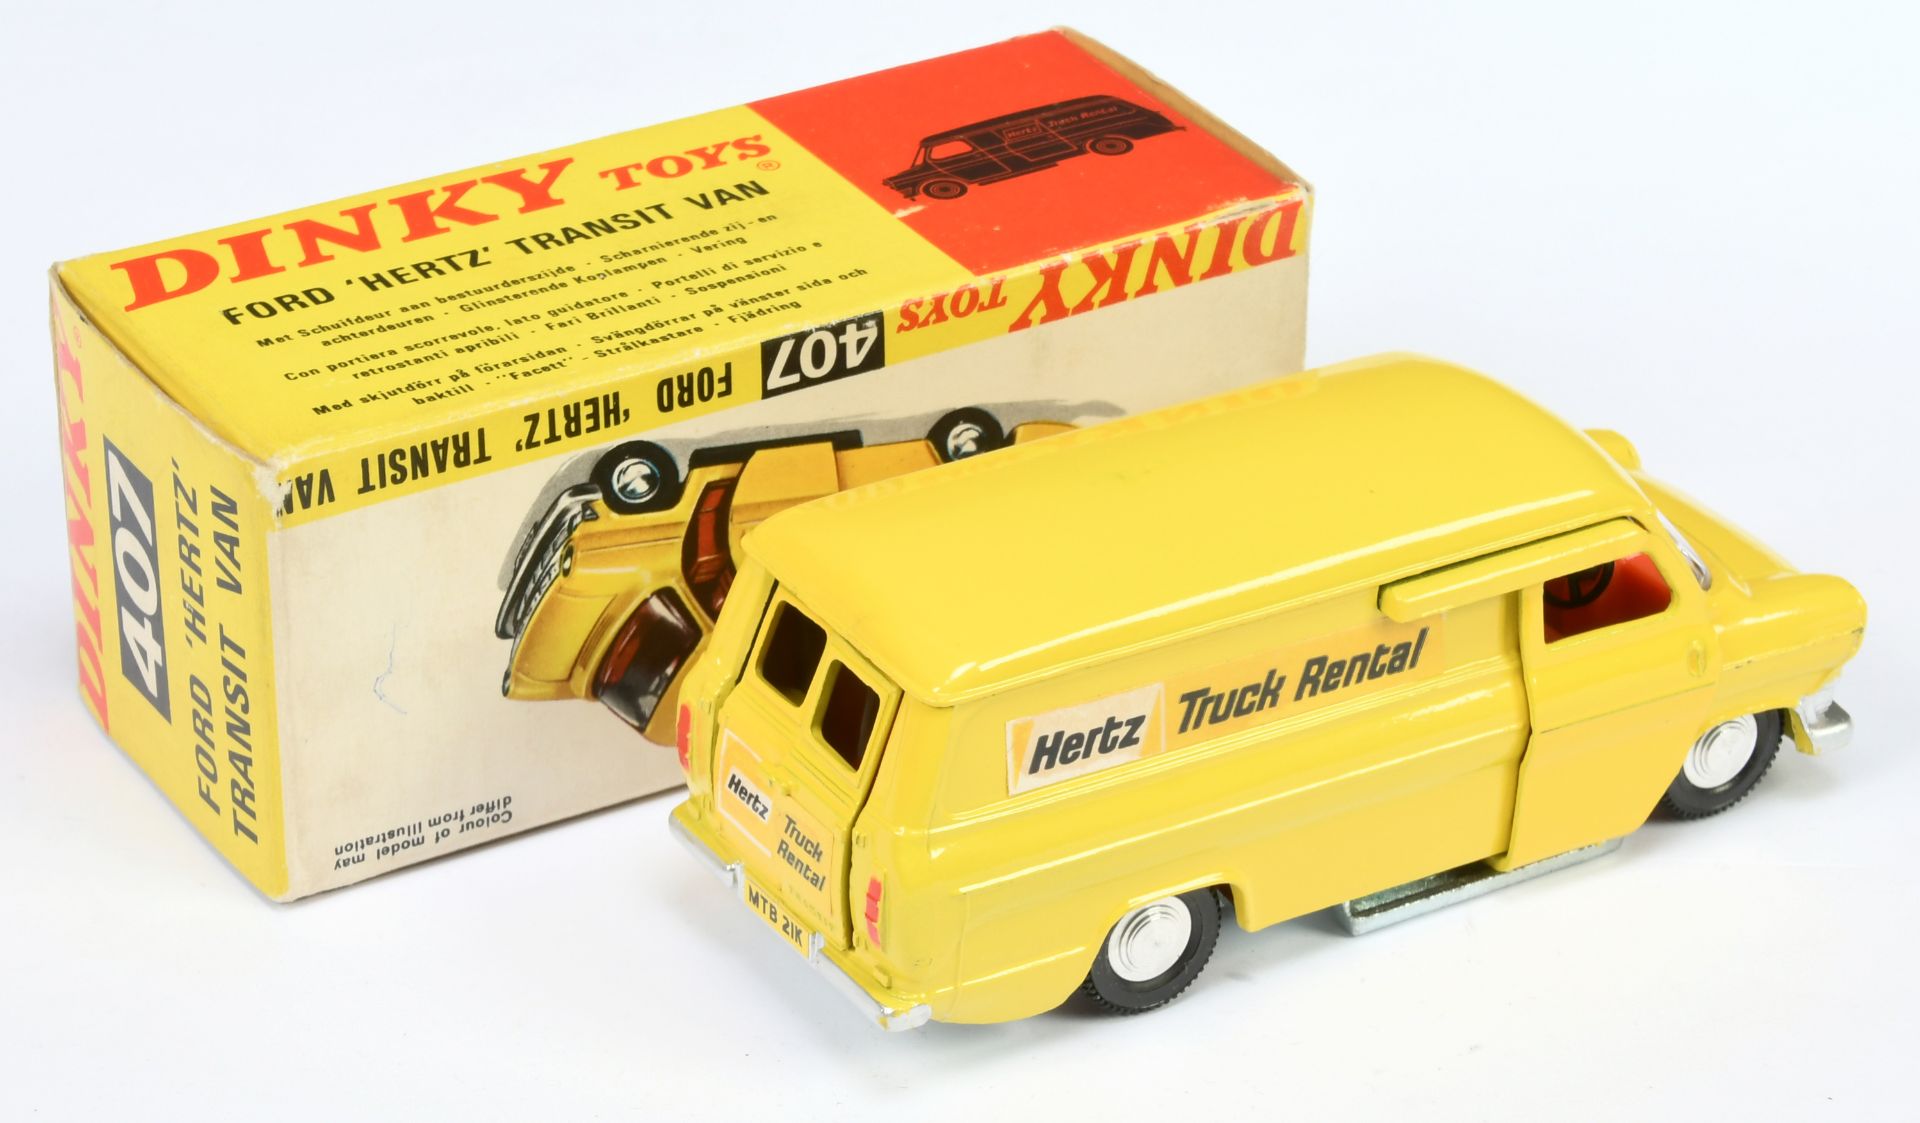 Dinky Toys 407 Ford transit van "Hertz Van Rental"  - Yellow body and opening doors, bare metal b... - Image 2 of 2